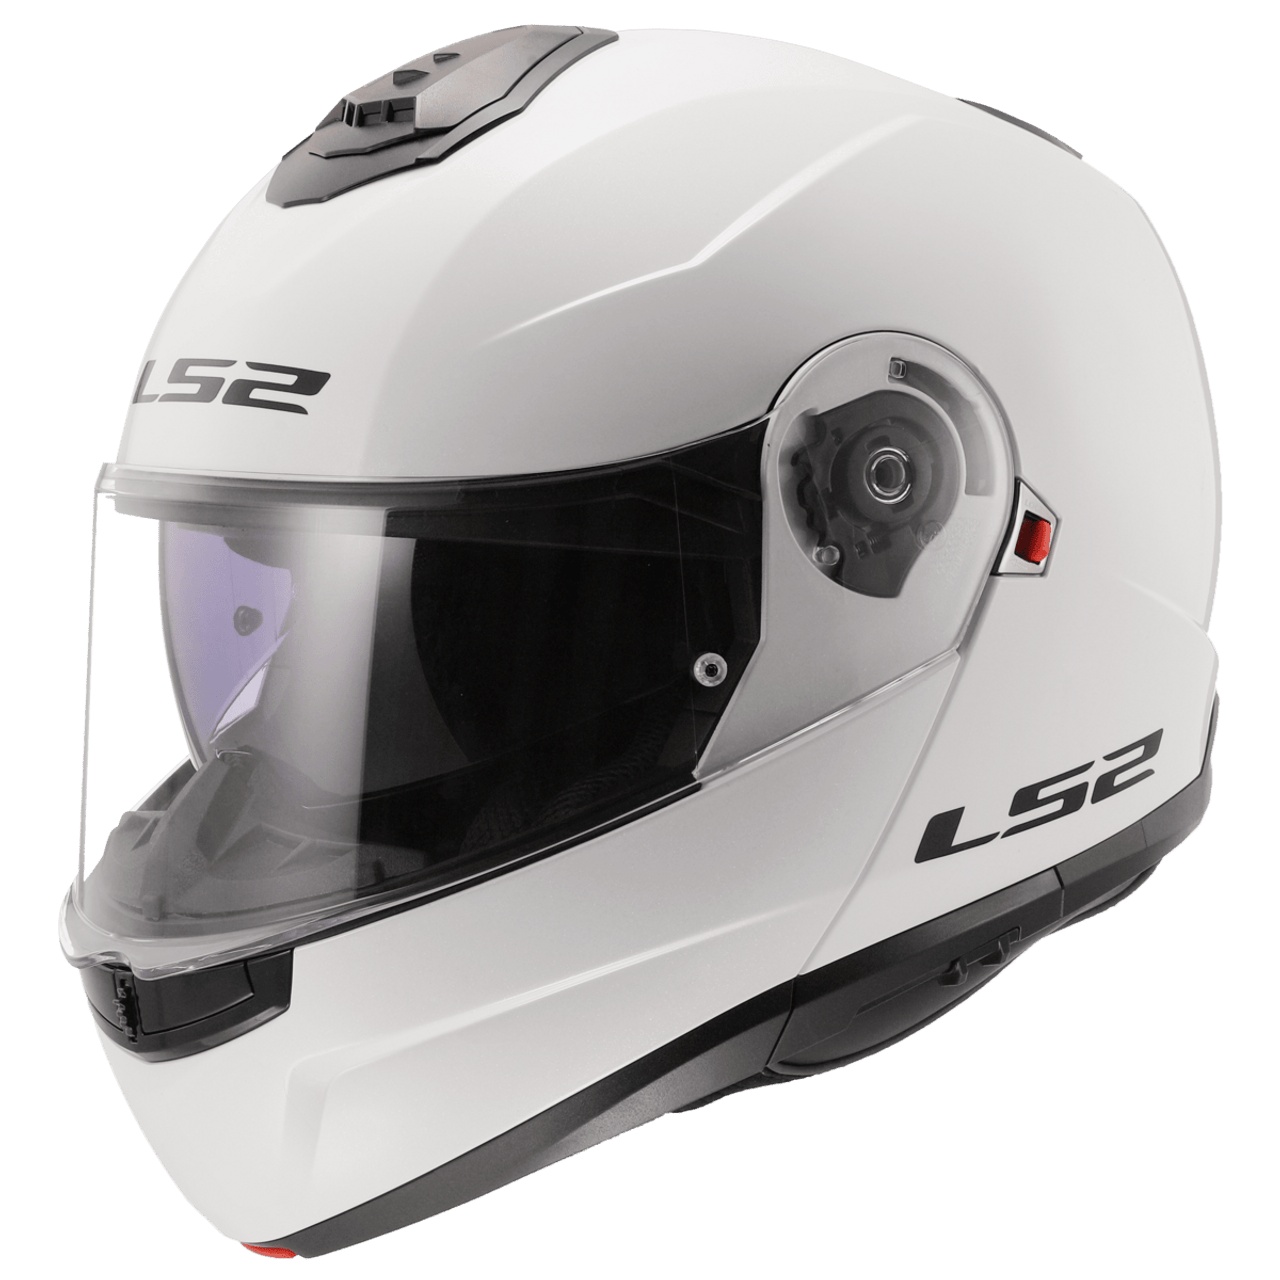 Ls2 Strobe Ii Solid Modular Motorcycle Helmet W Sunshield Team